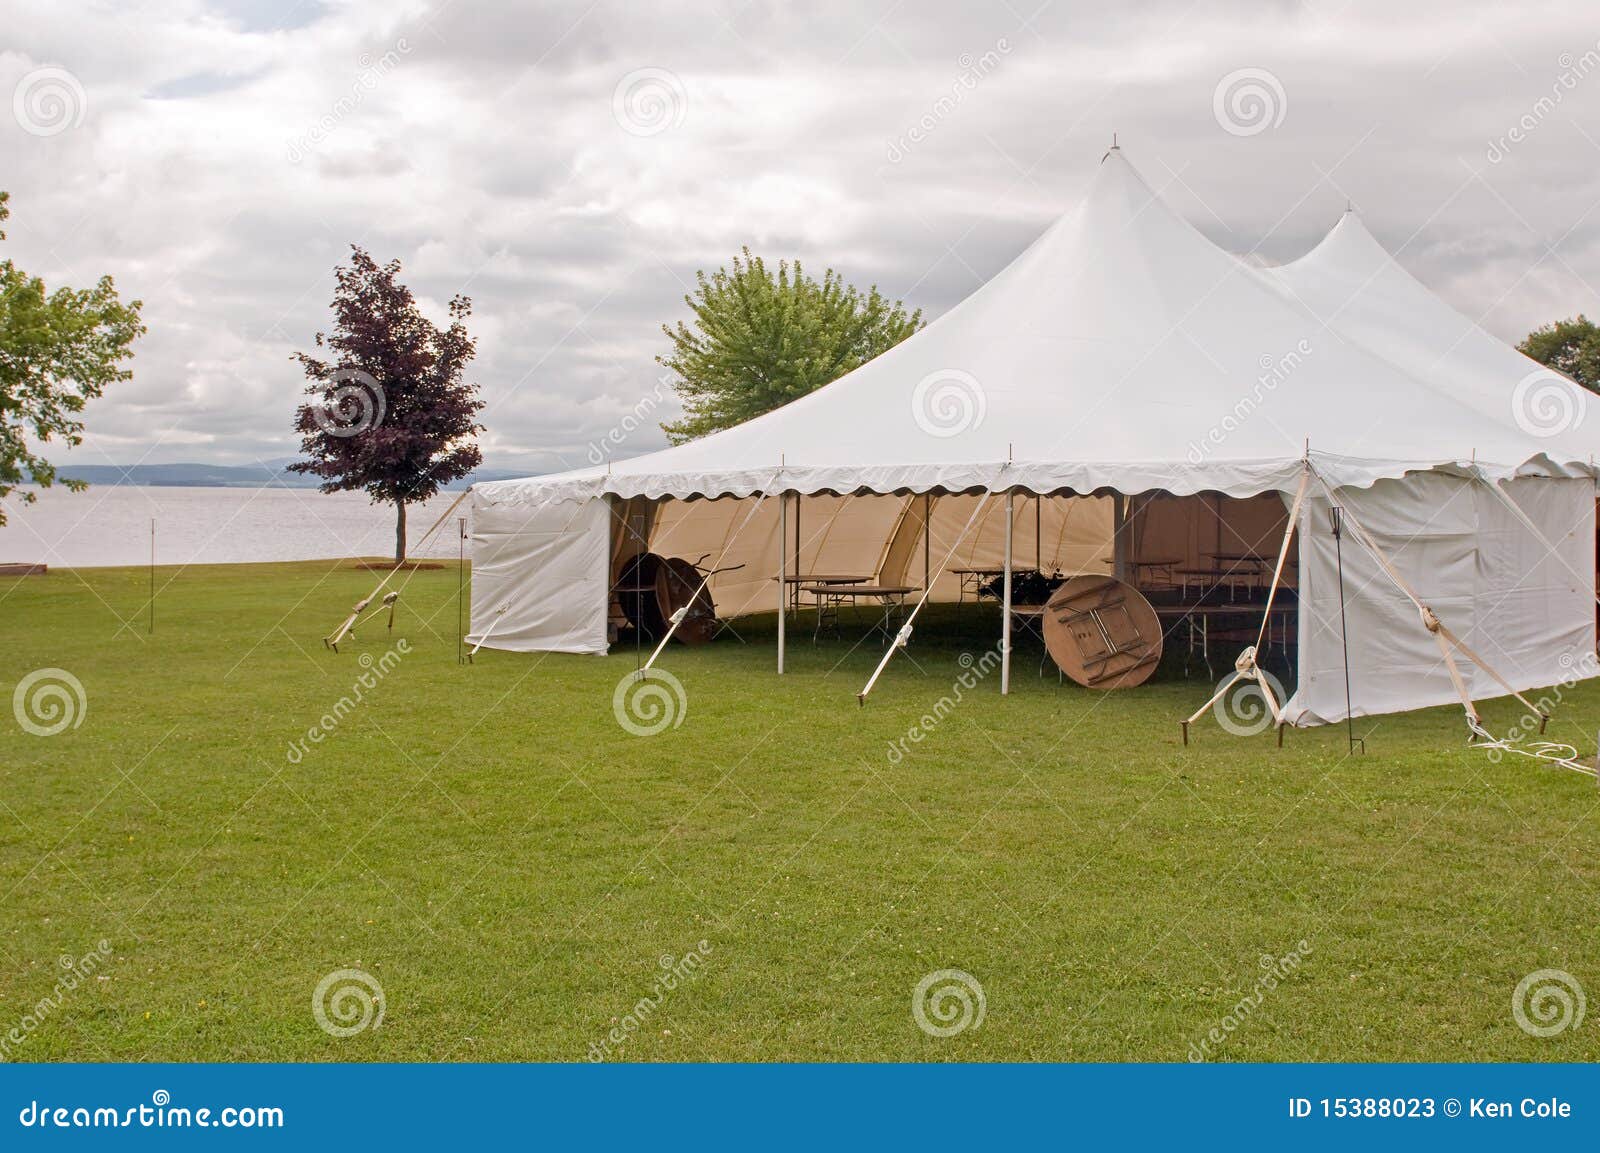 white wedding party tent